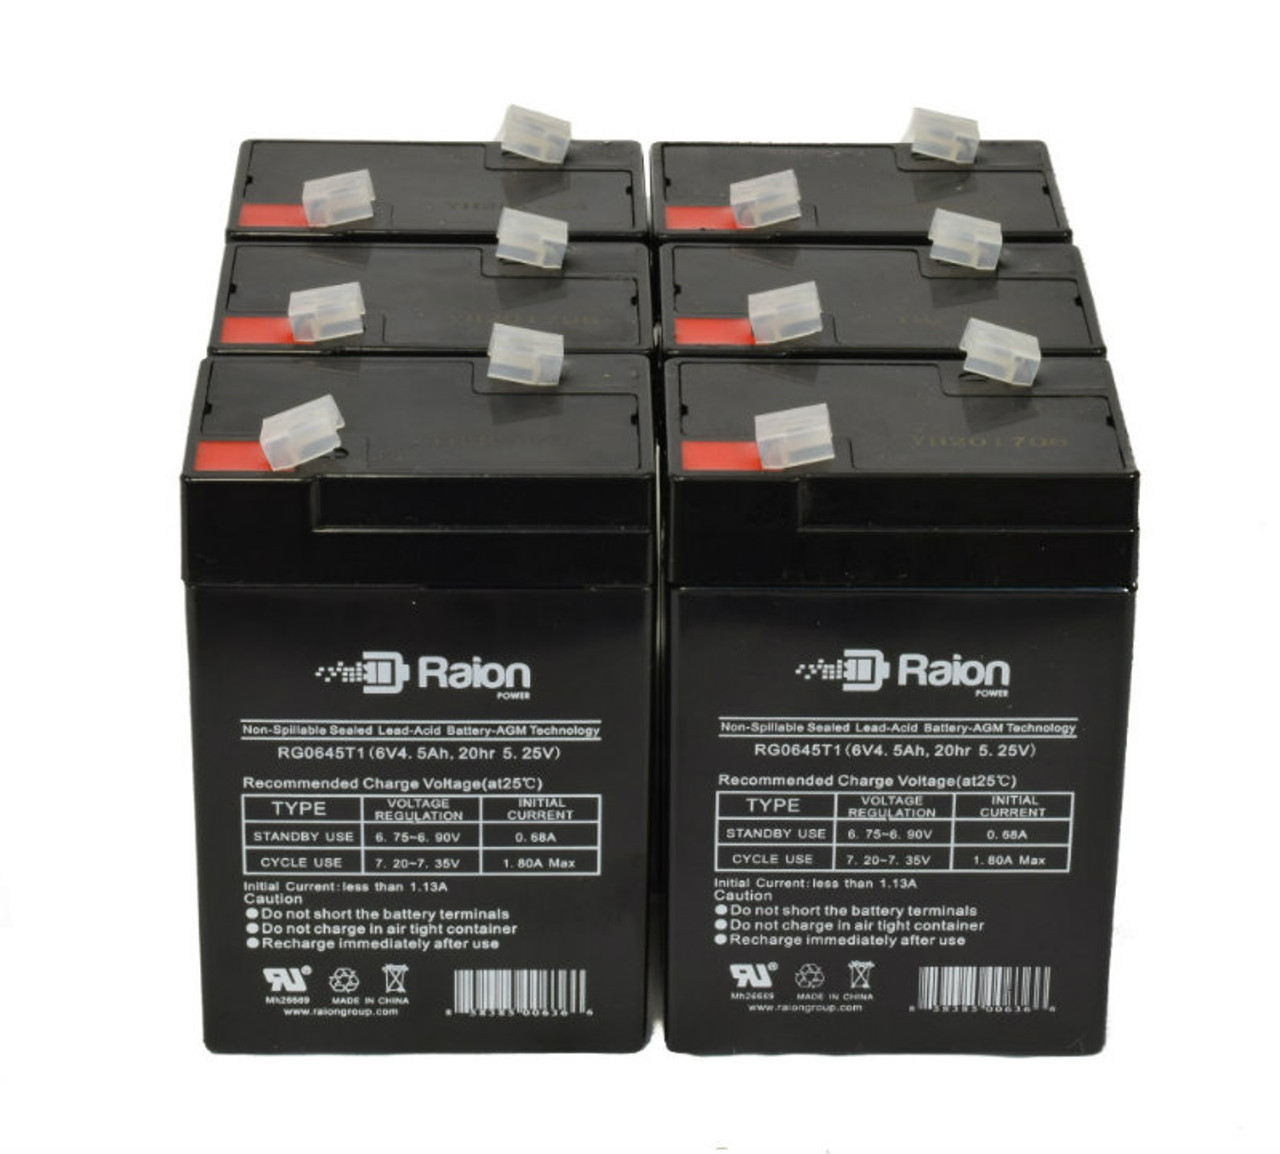 Raion Power 6 Volt 4.5Ah RG0645T1 Replacement Battery for Ultratech UT-640 - 6 Pack